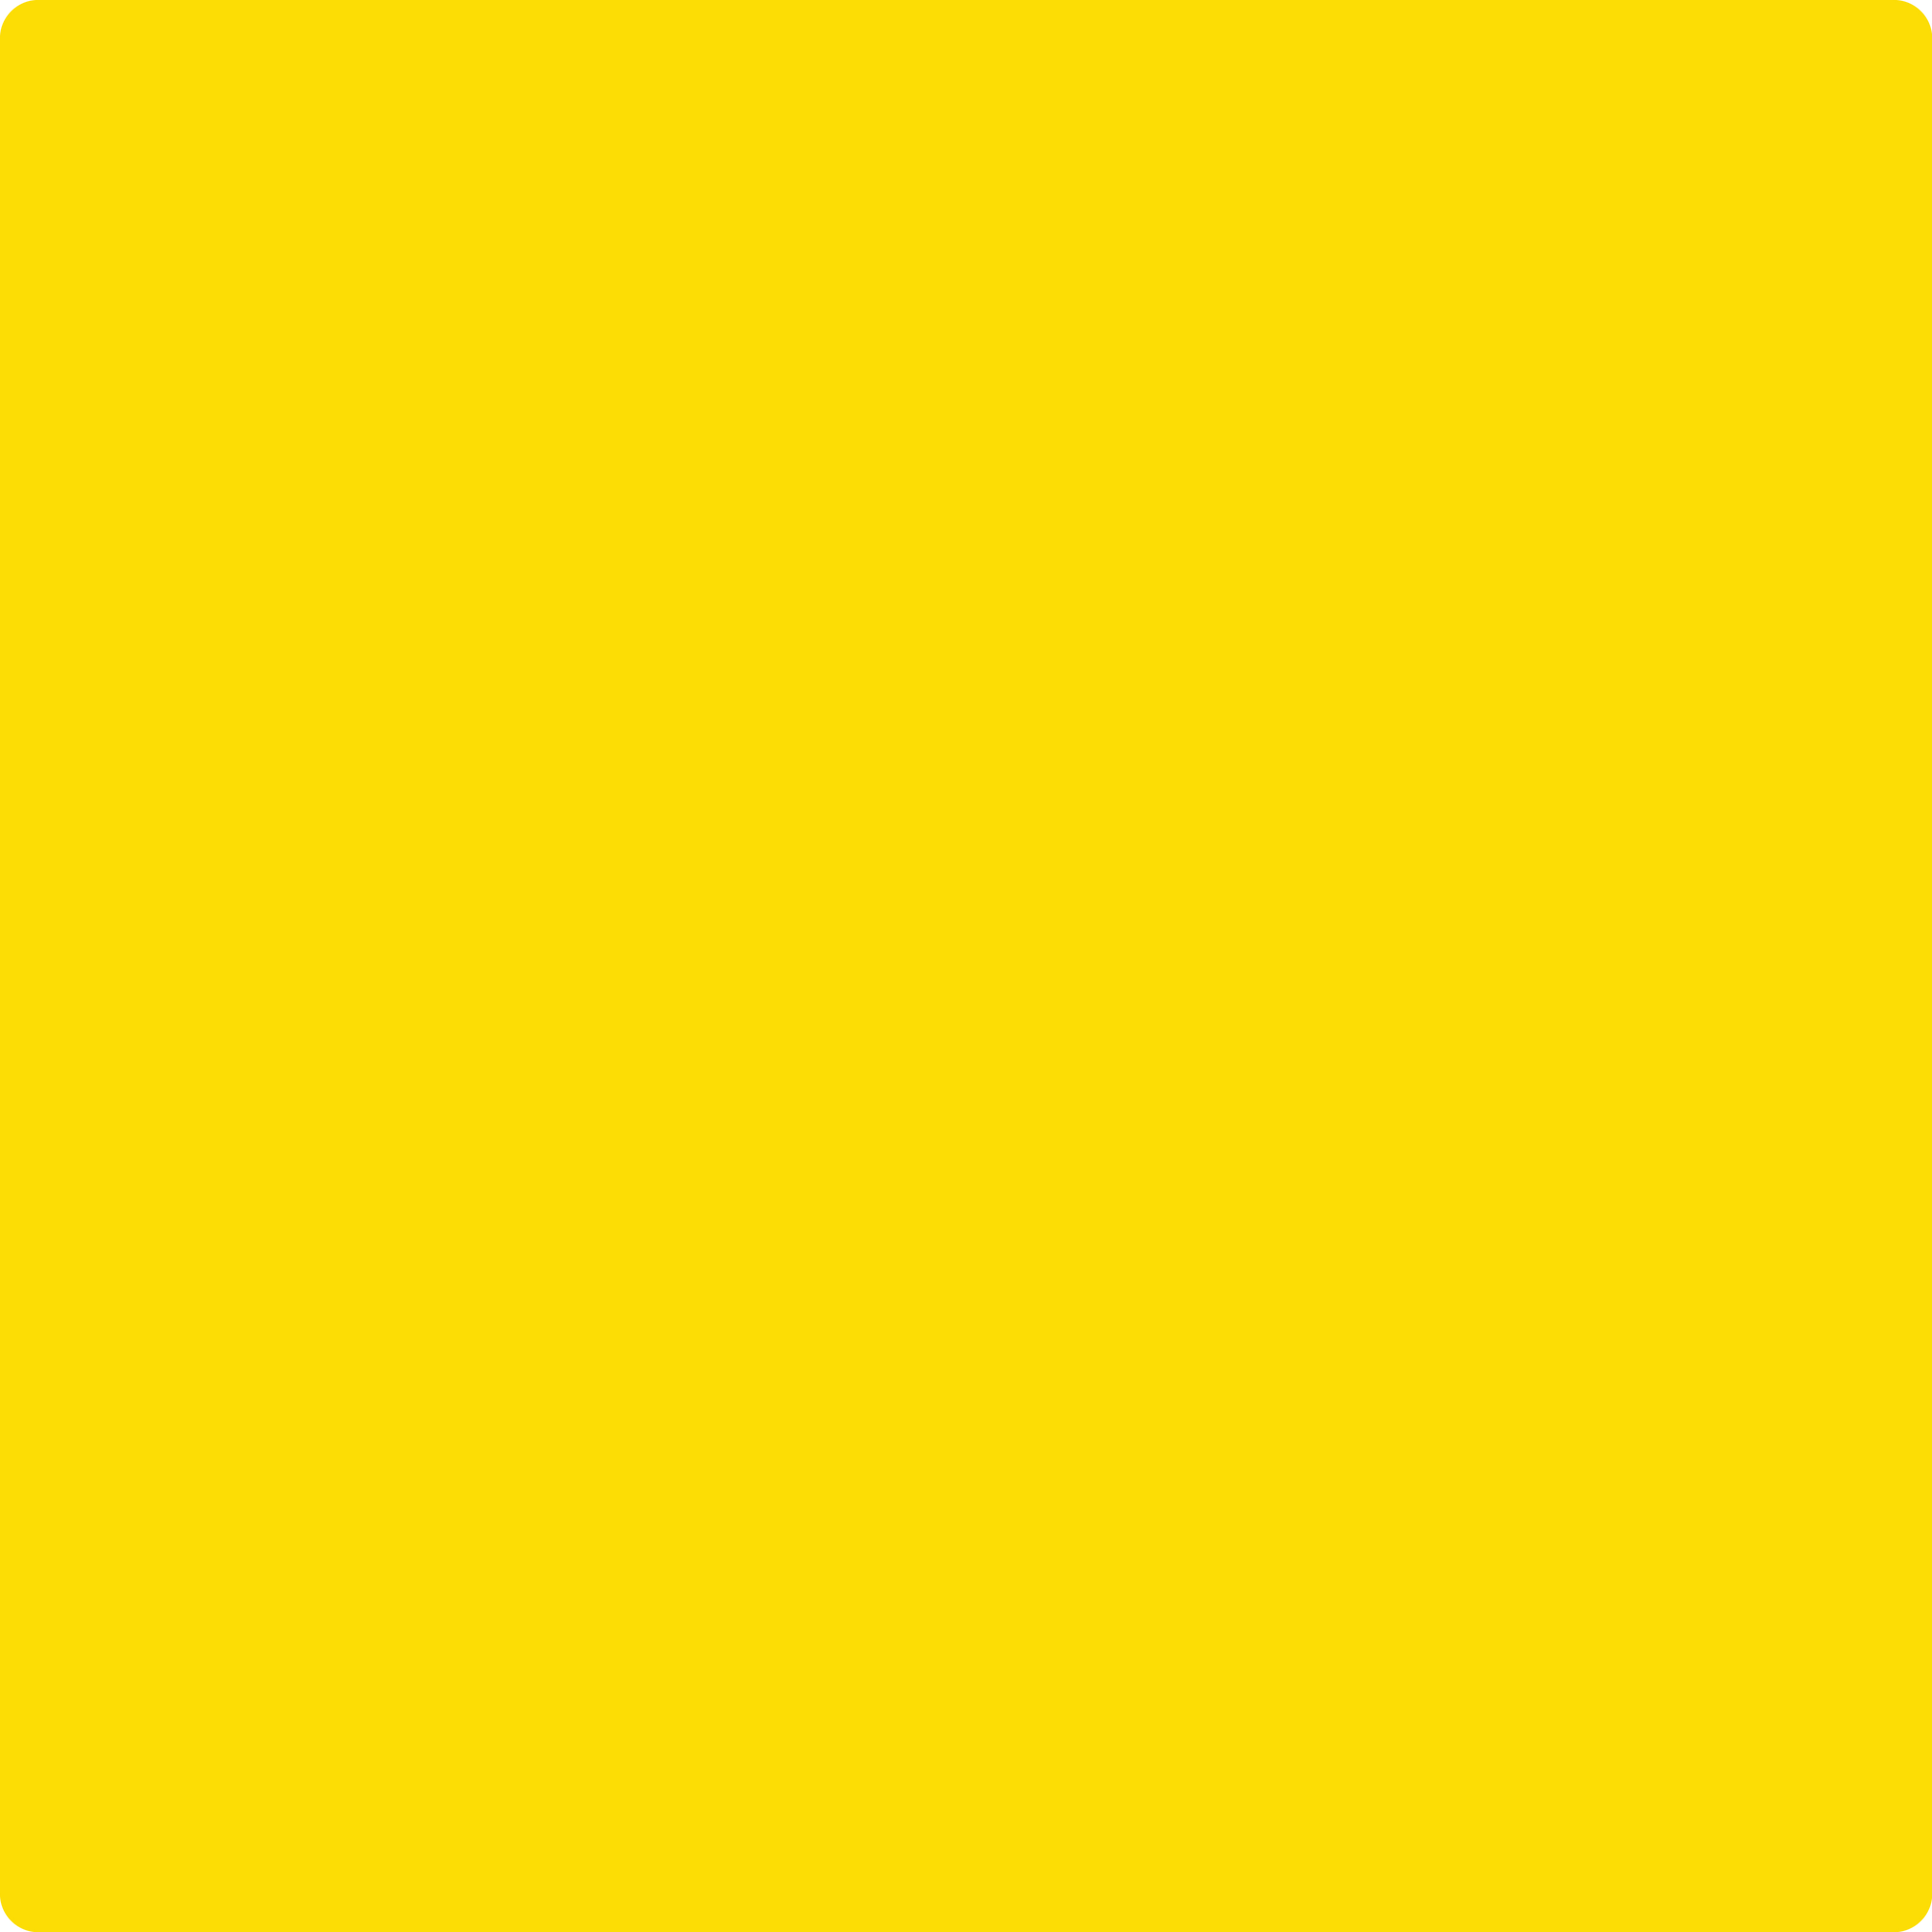 Shop Benajmin Moore's 2022-30 Bright Yellow at Aboff's in New York & Long Island. Long Island's favorite Benjamin Moore dealer.